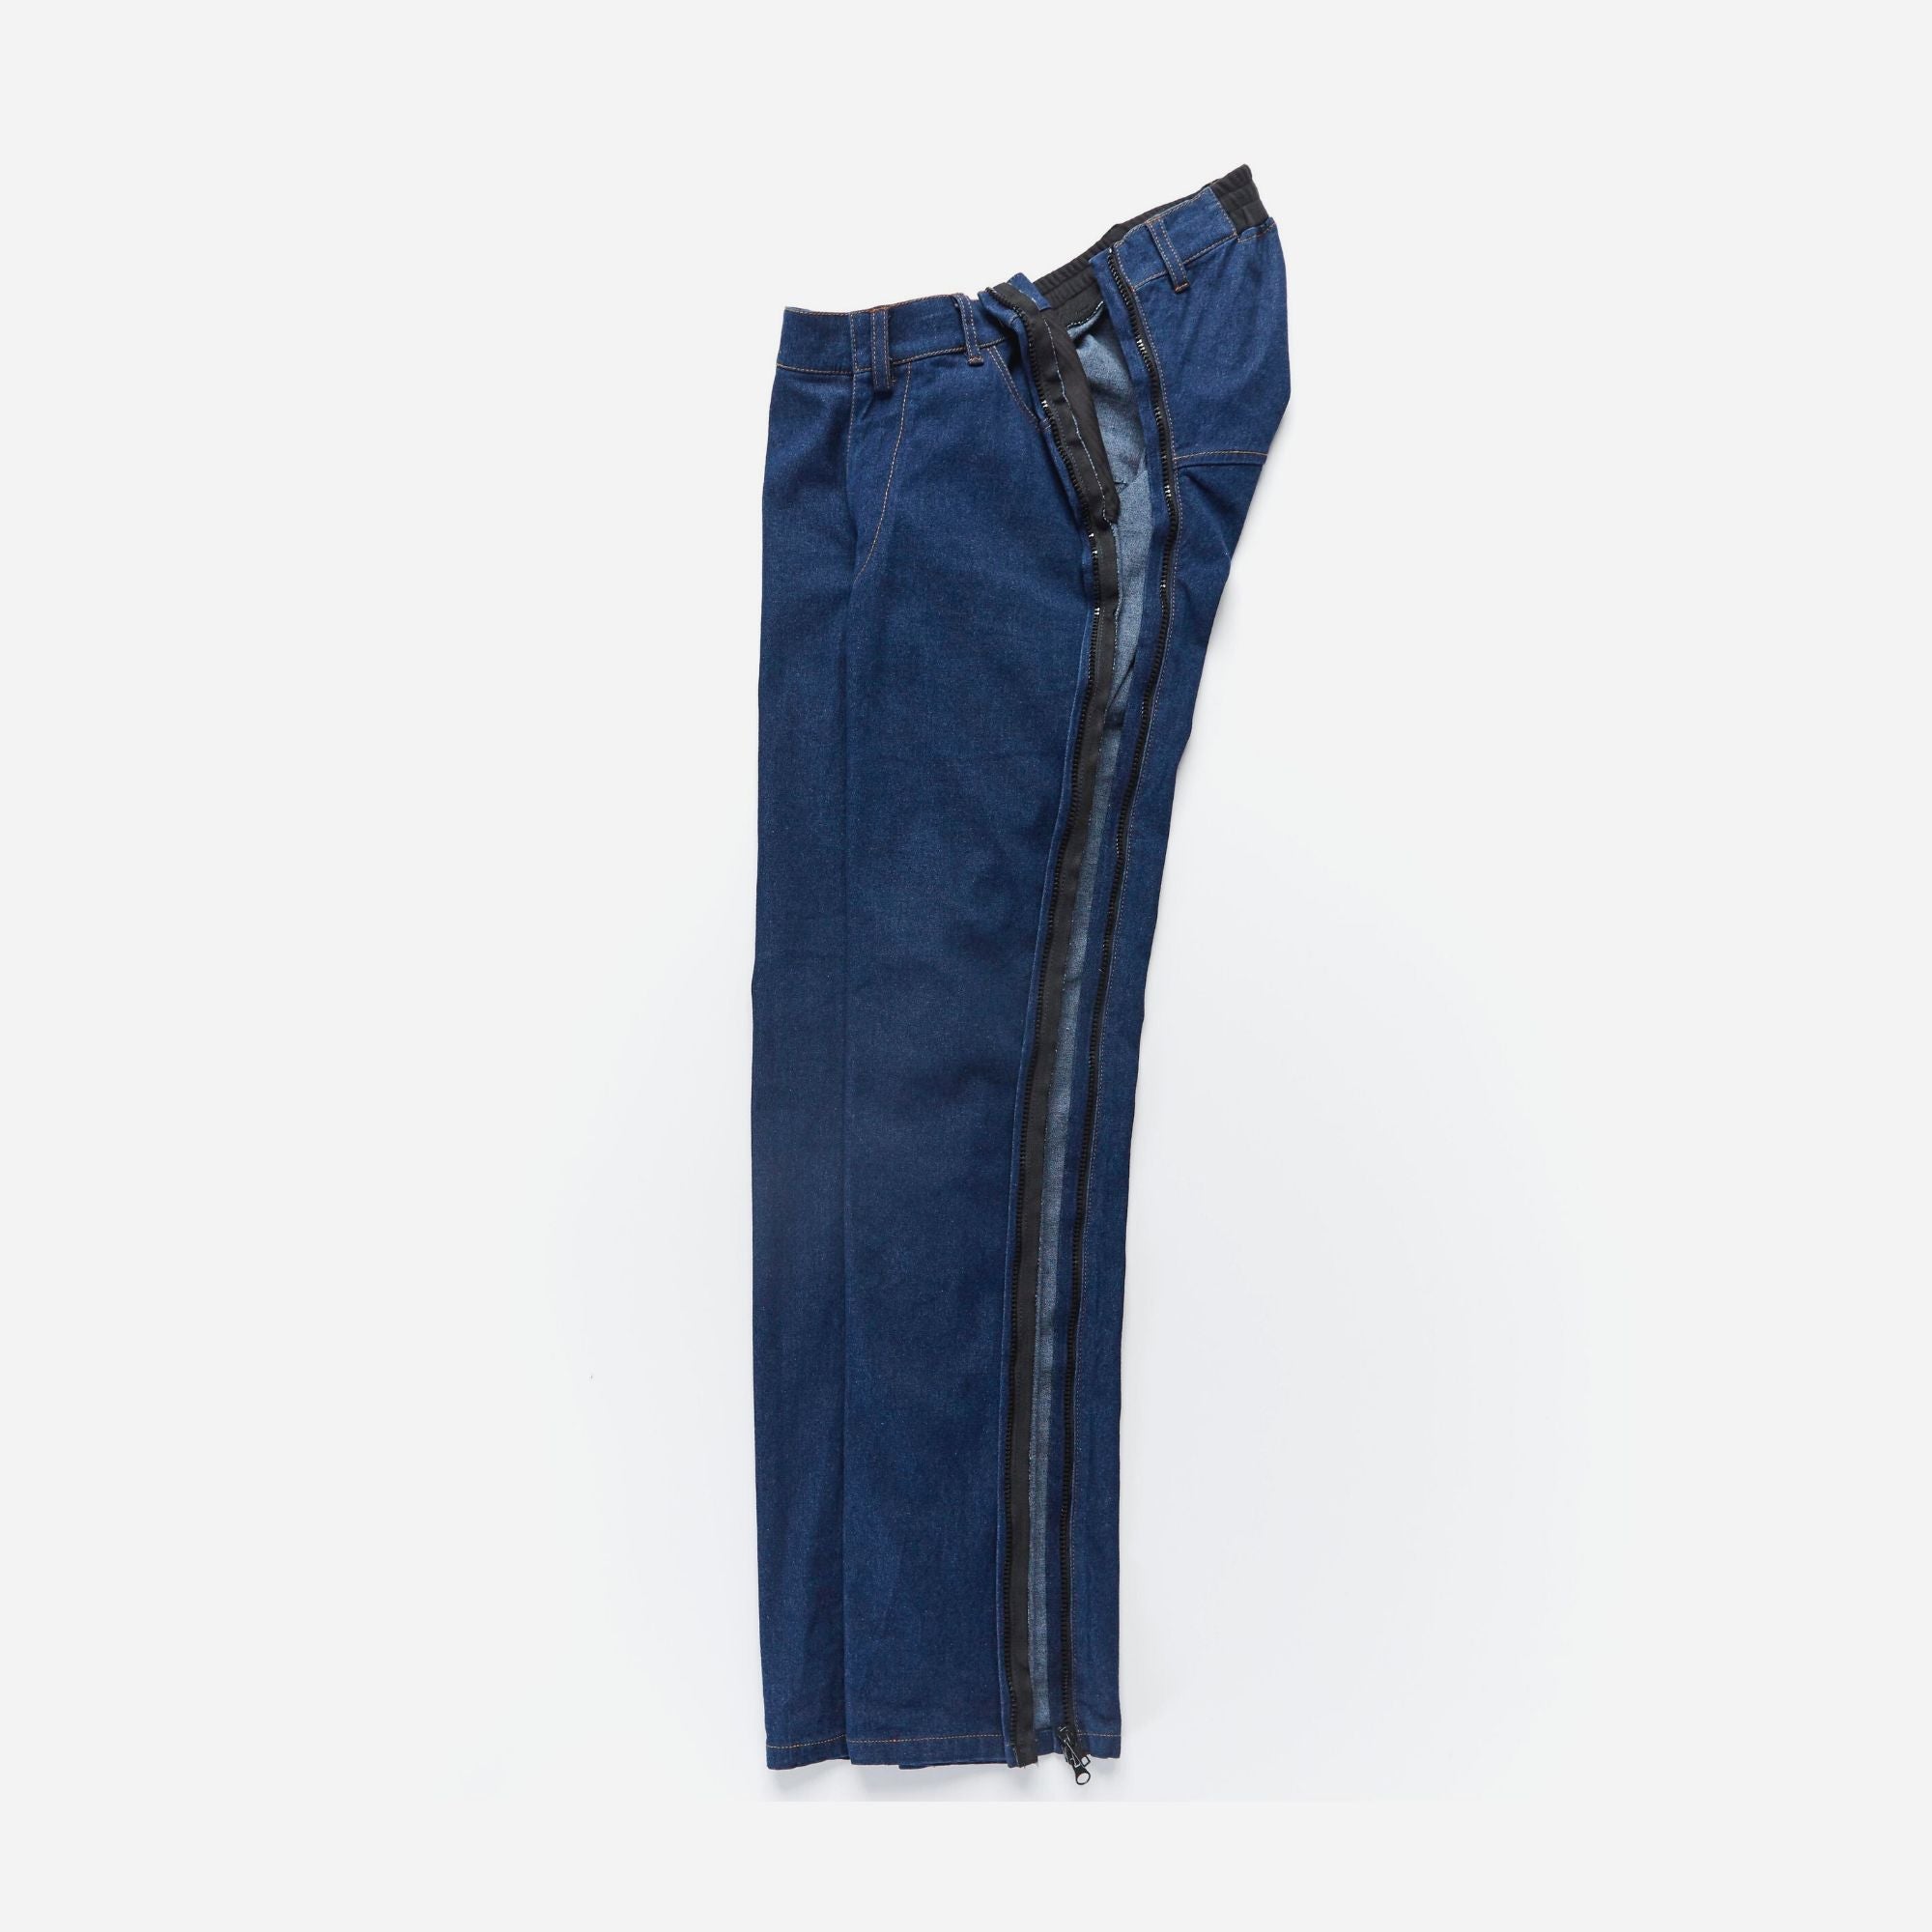 Dundas Side-zip Stretch Jeans in a Wheelchair Cut